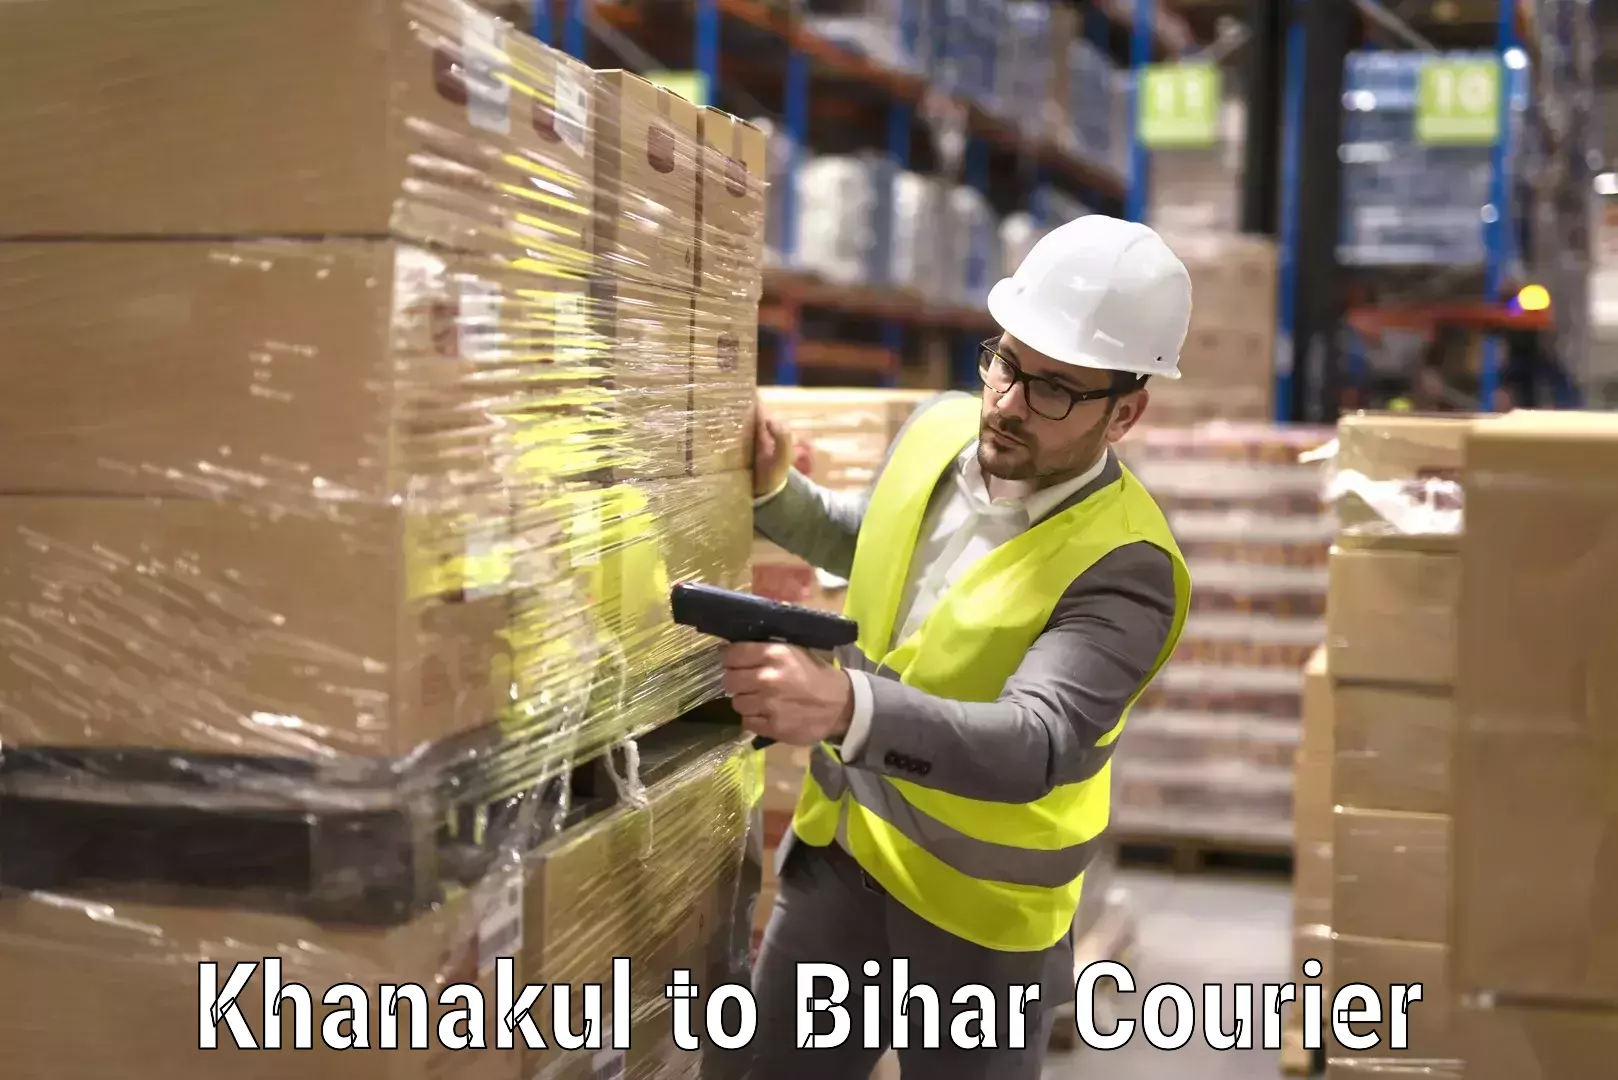 Professional moving company Khanakul to Bihar